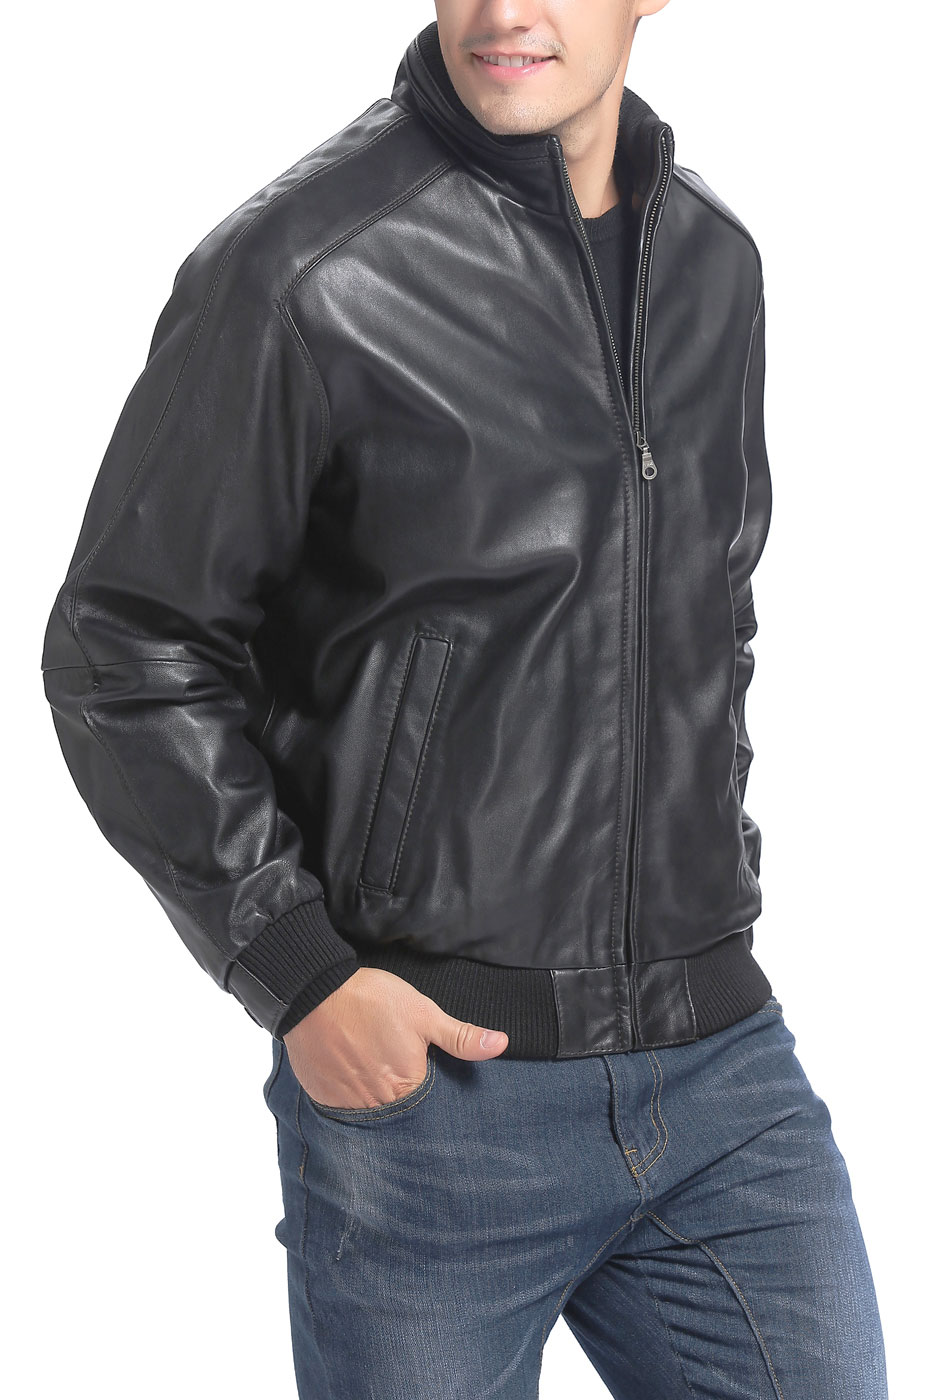 BGSD Men's City Lambskin Leather Bomber Jacket - Big and Tall